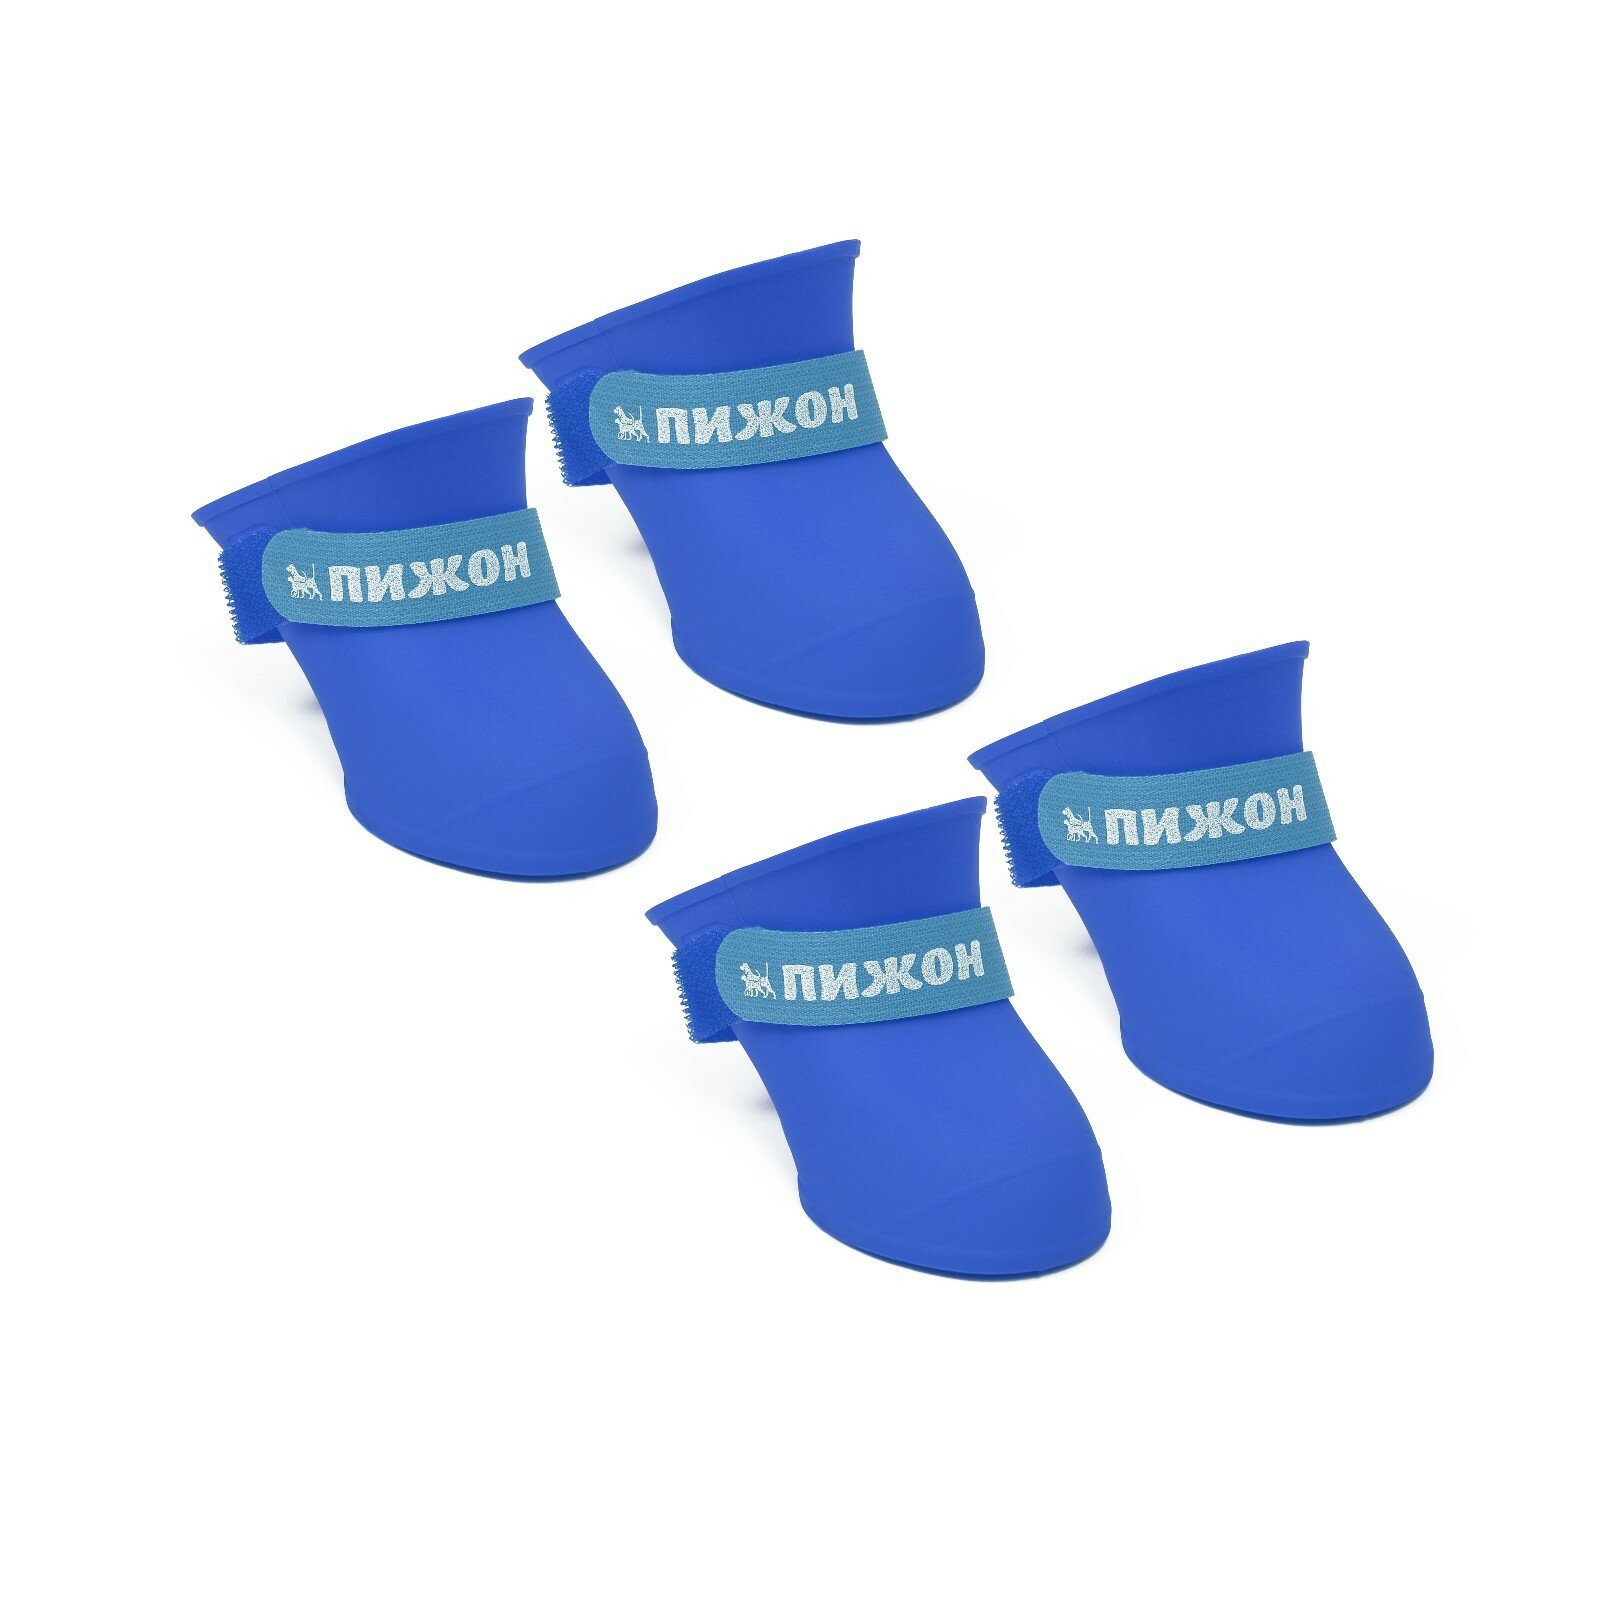 Сапоги резиновые Пижон, набор 4 шт., р-р S (подошва 4 Х 3 см), синие - фотография № 3